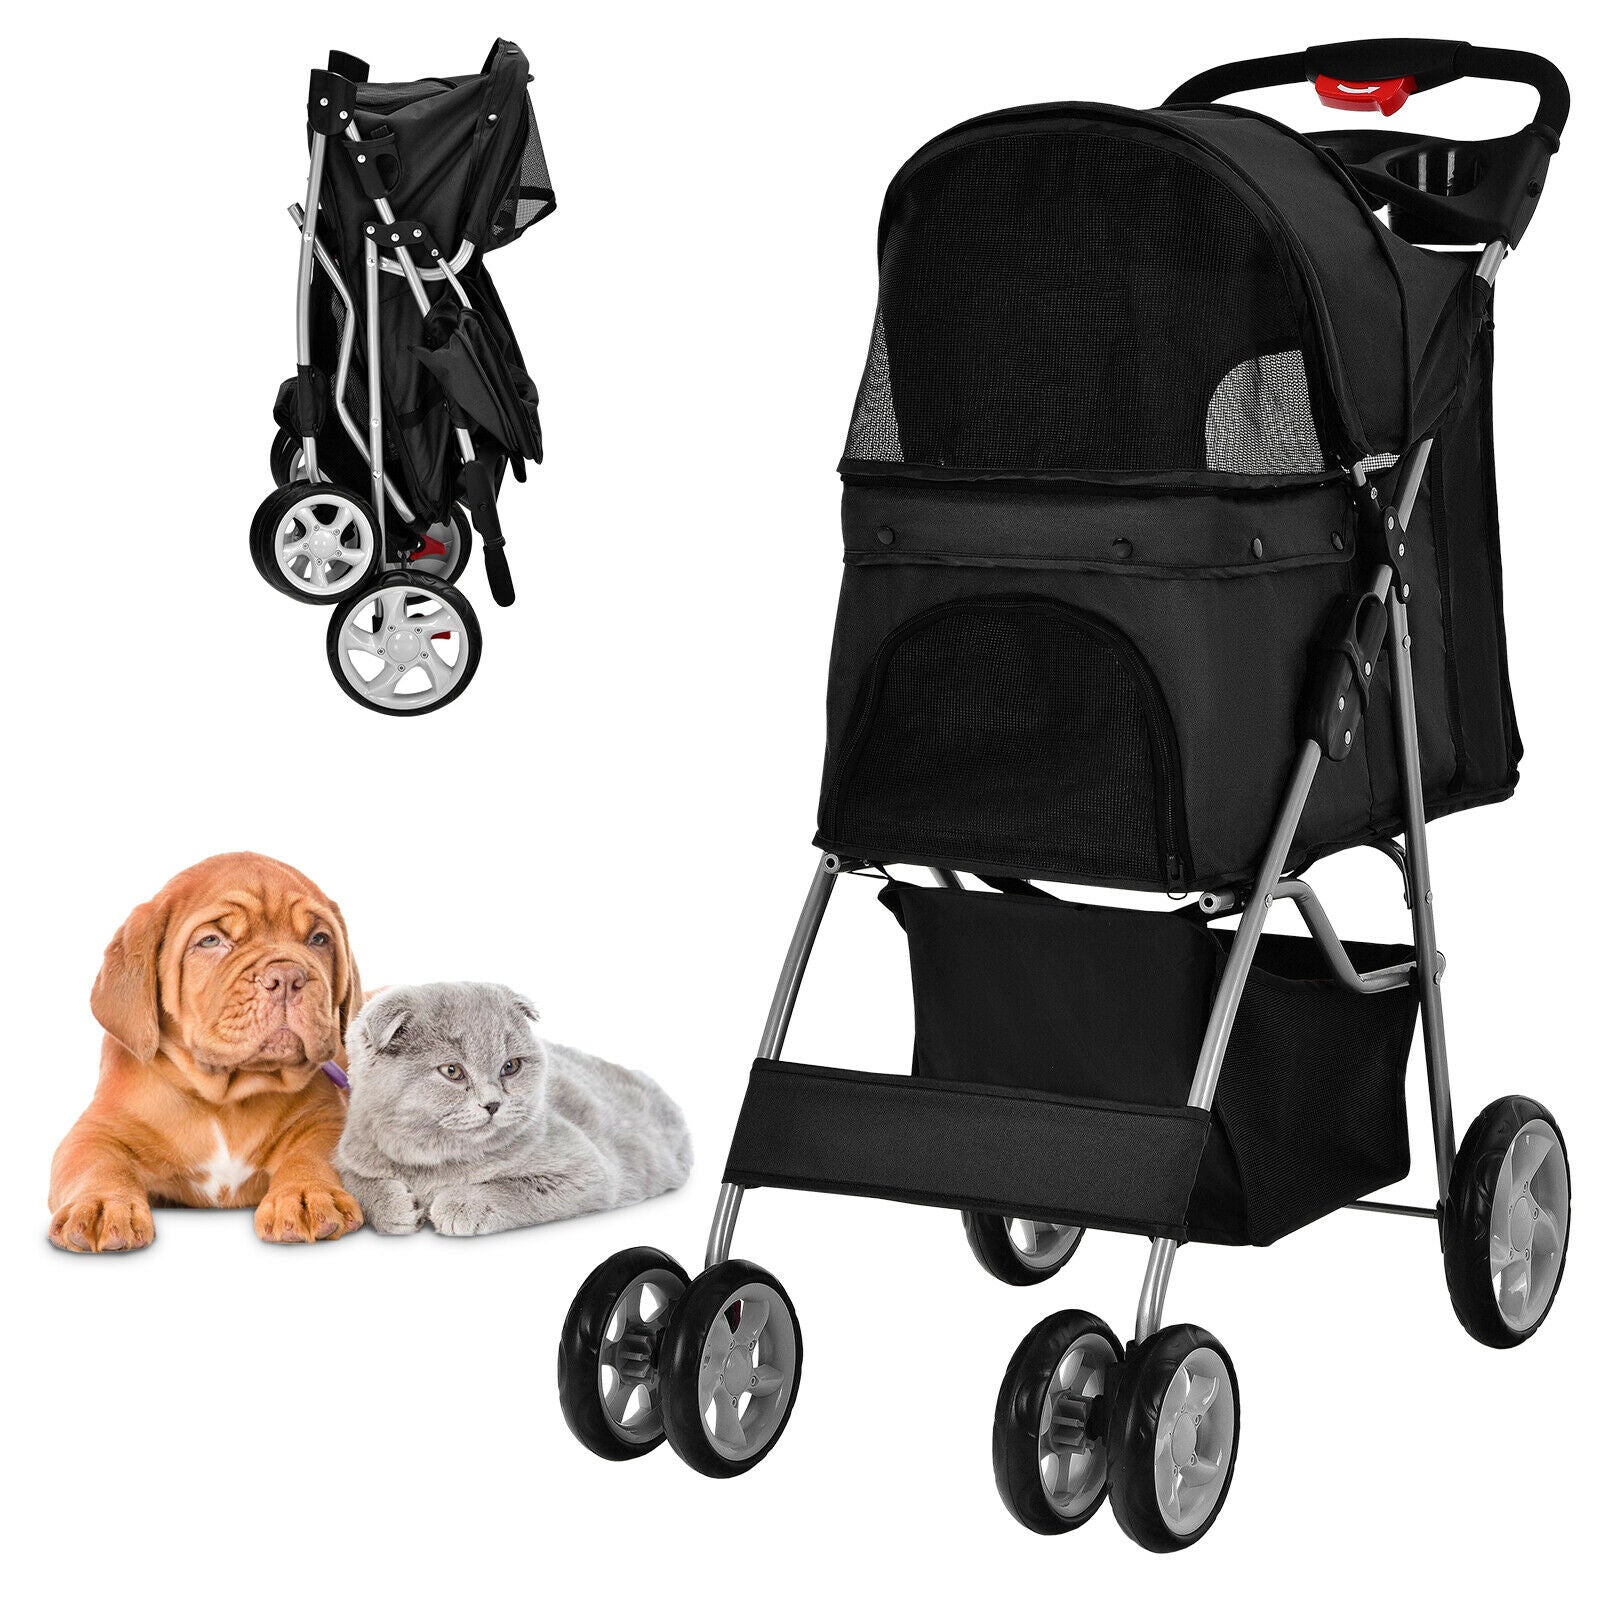 4-Wheel Folding Pet Stroller with Storage Basket and Adjustable Canopy-Black